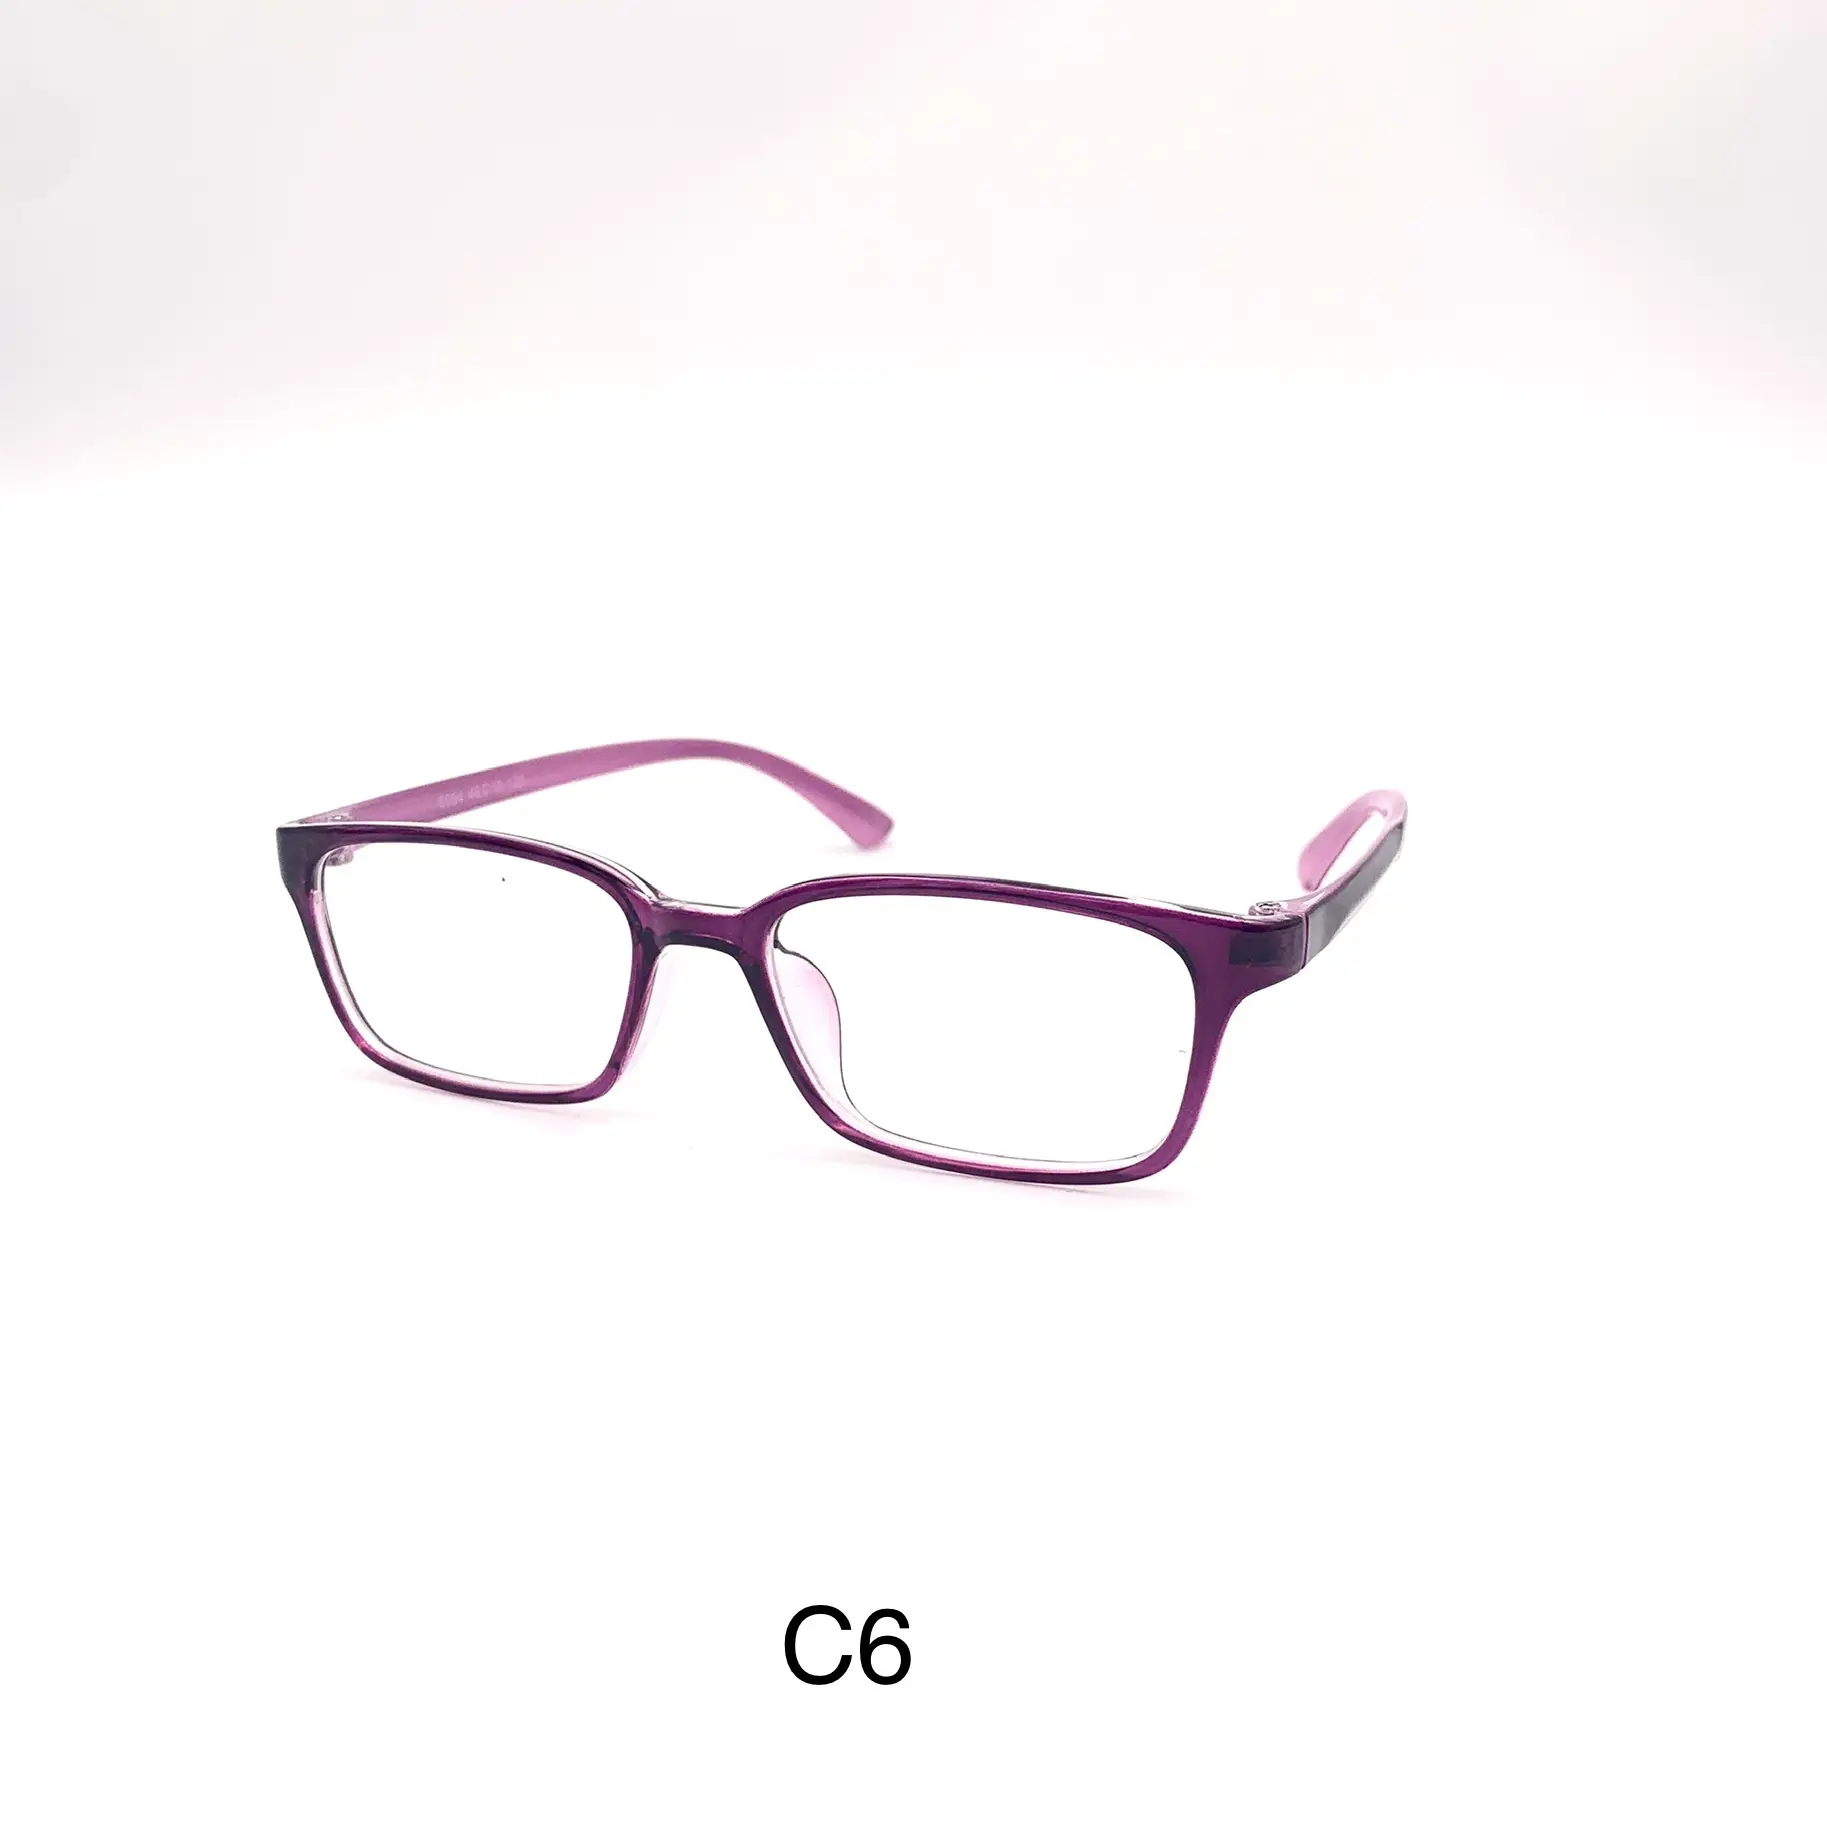 VisualMate Cheap Small Size Eye Glasses TR90 Frame Glasses Optical Eyewear for Unisex Eyeglass